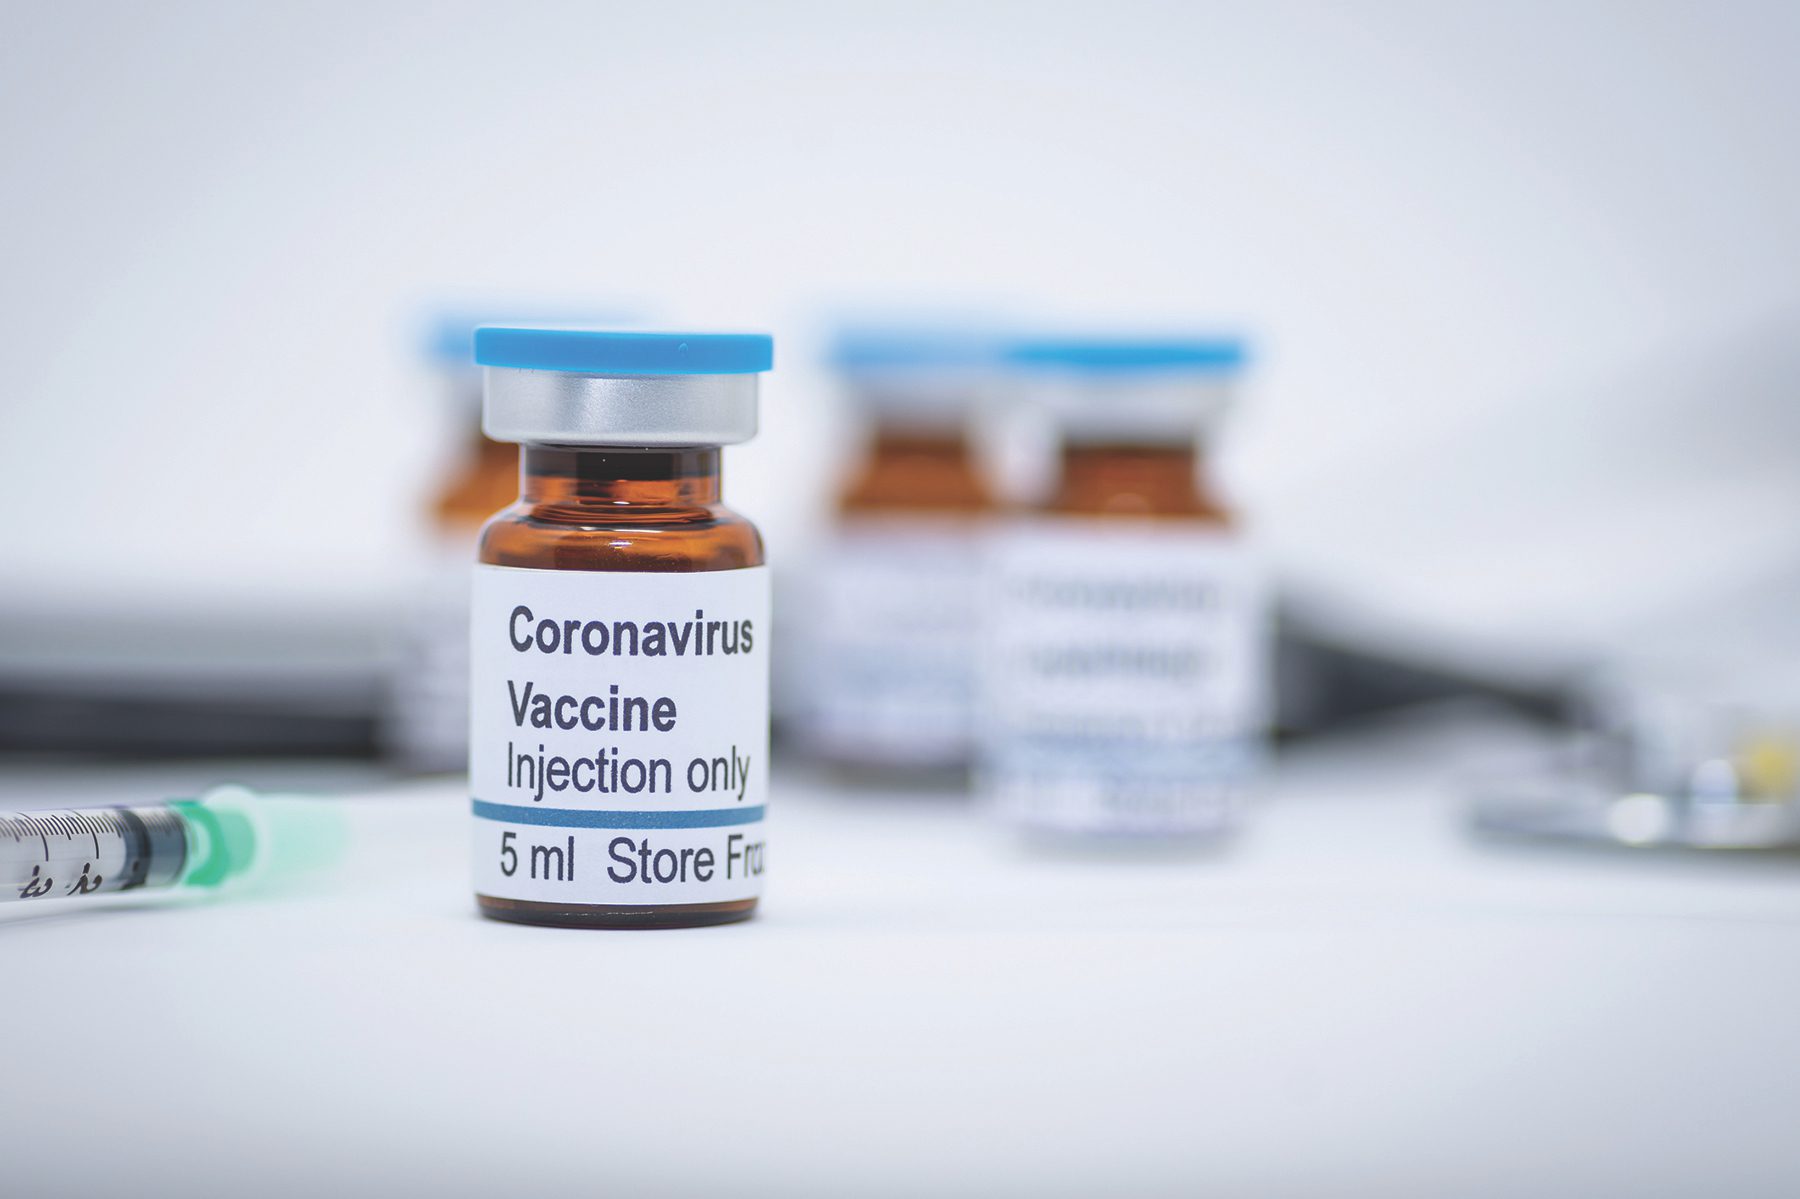 Corona Vaccination dry run all over India will start from 2 January 2021